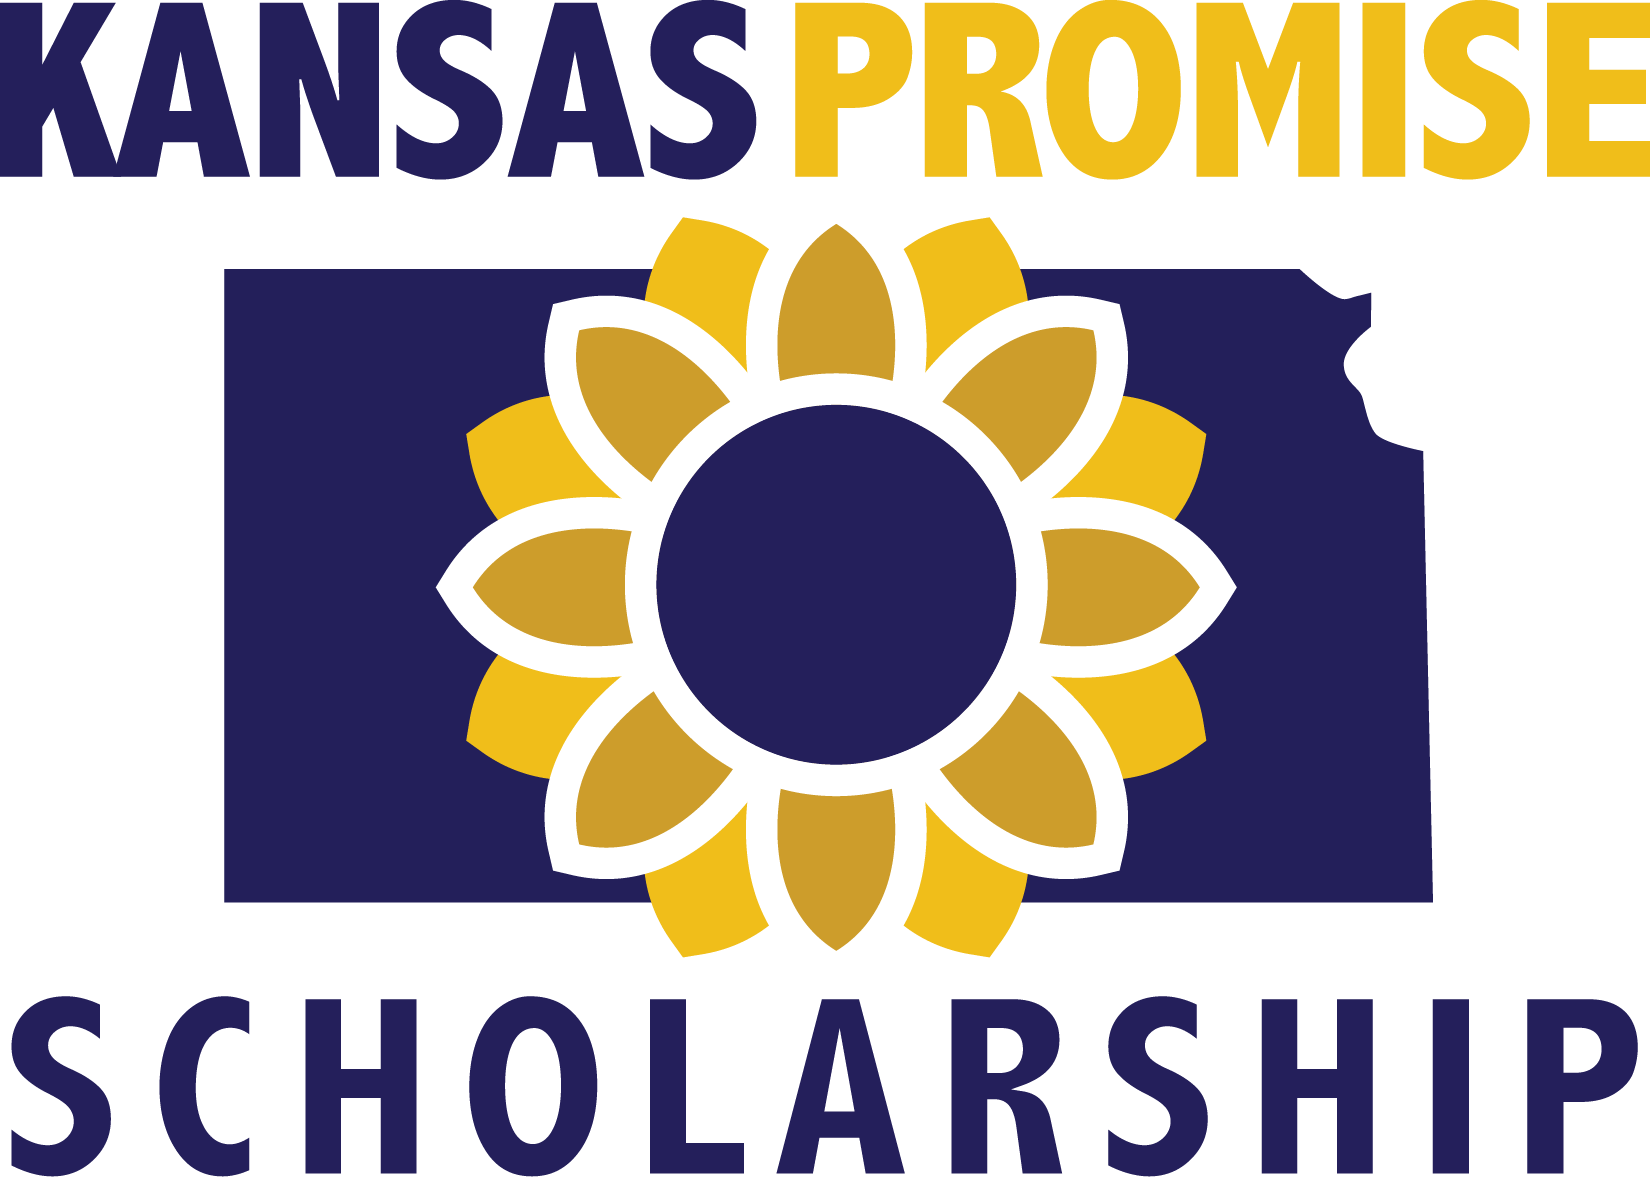 Kansas Promise Scholarship logo